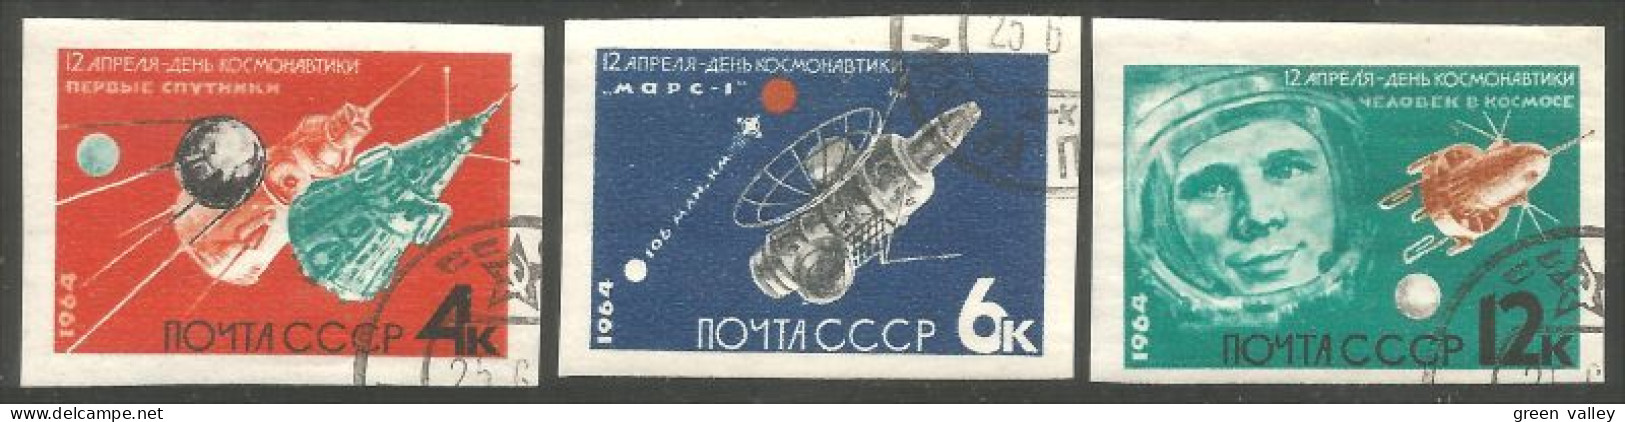 773 Russie Espace Space Satellites Gagarine Spoutnik Sputnik Imperforate (RUK-673) - Rusland En USSR